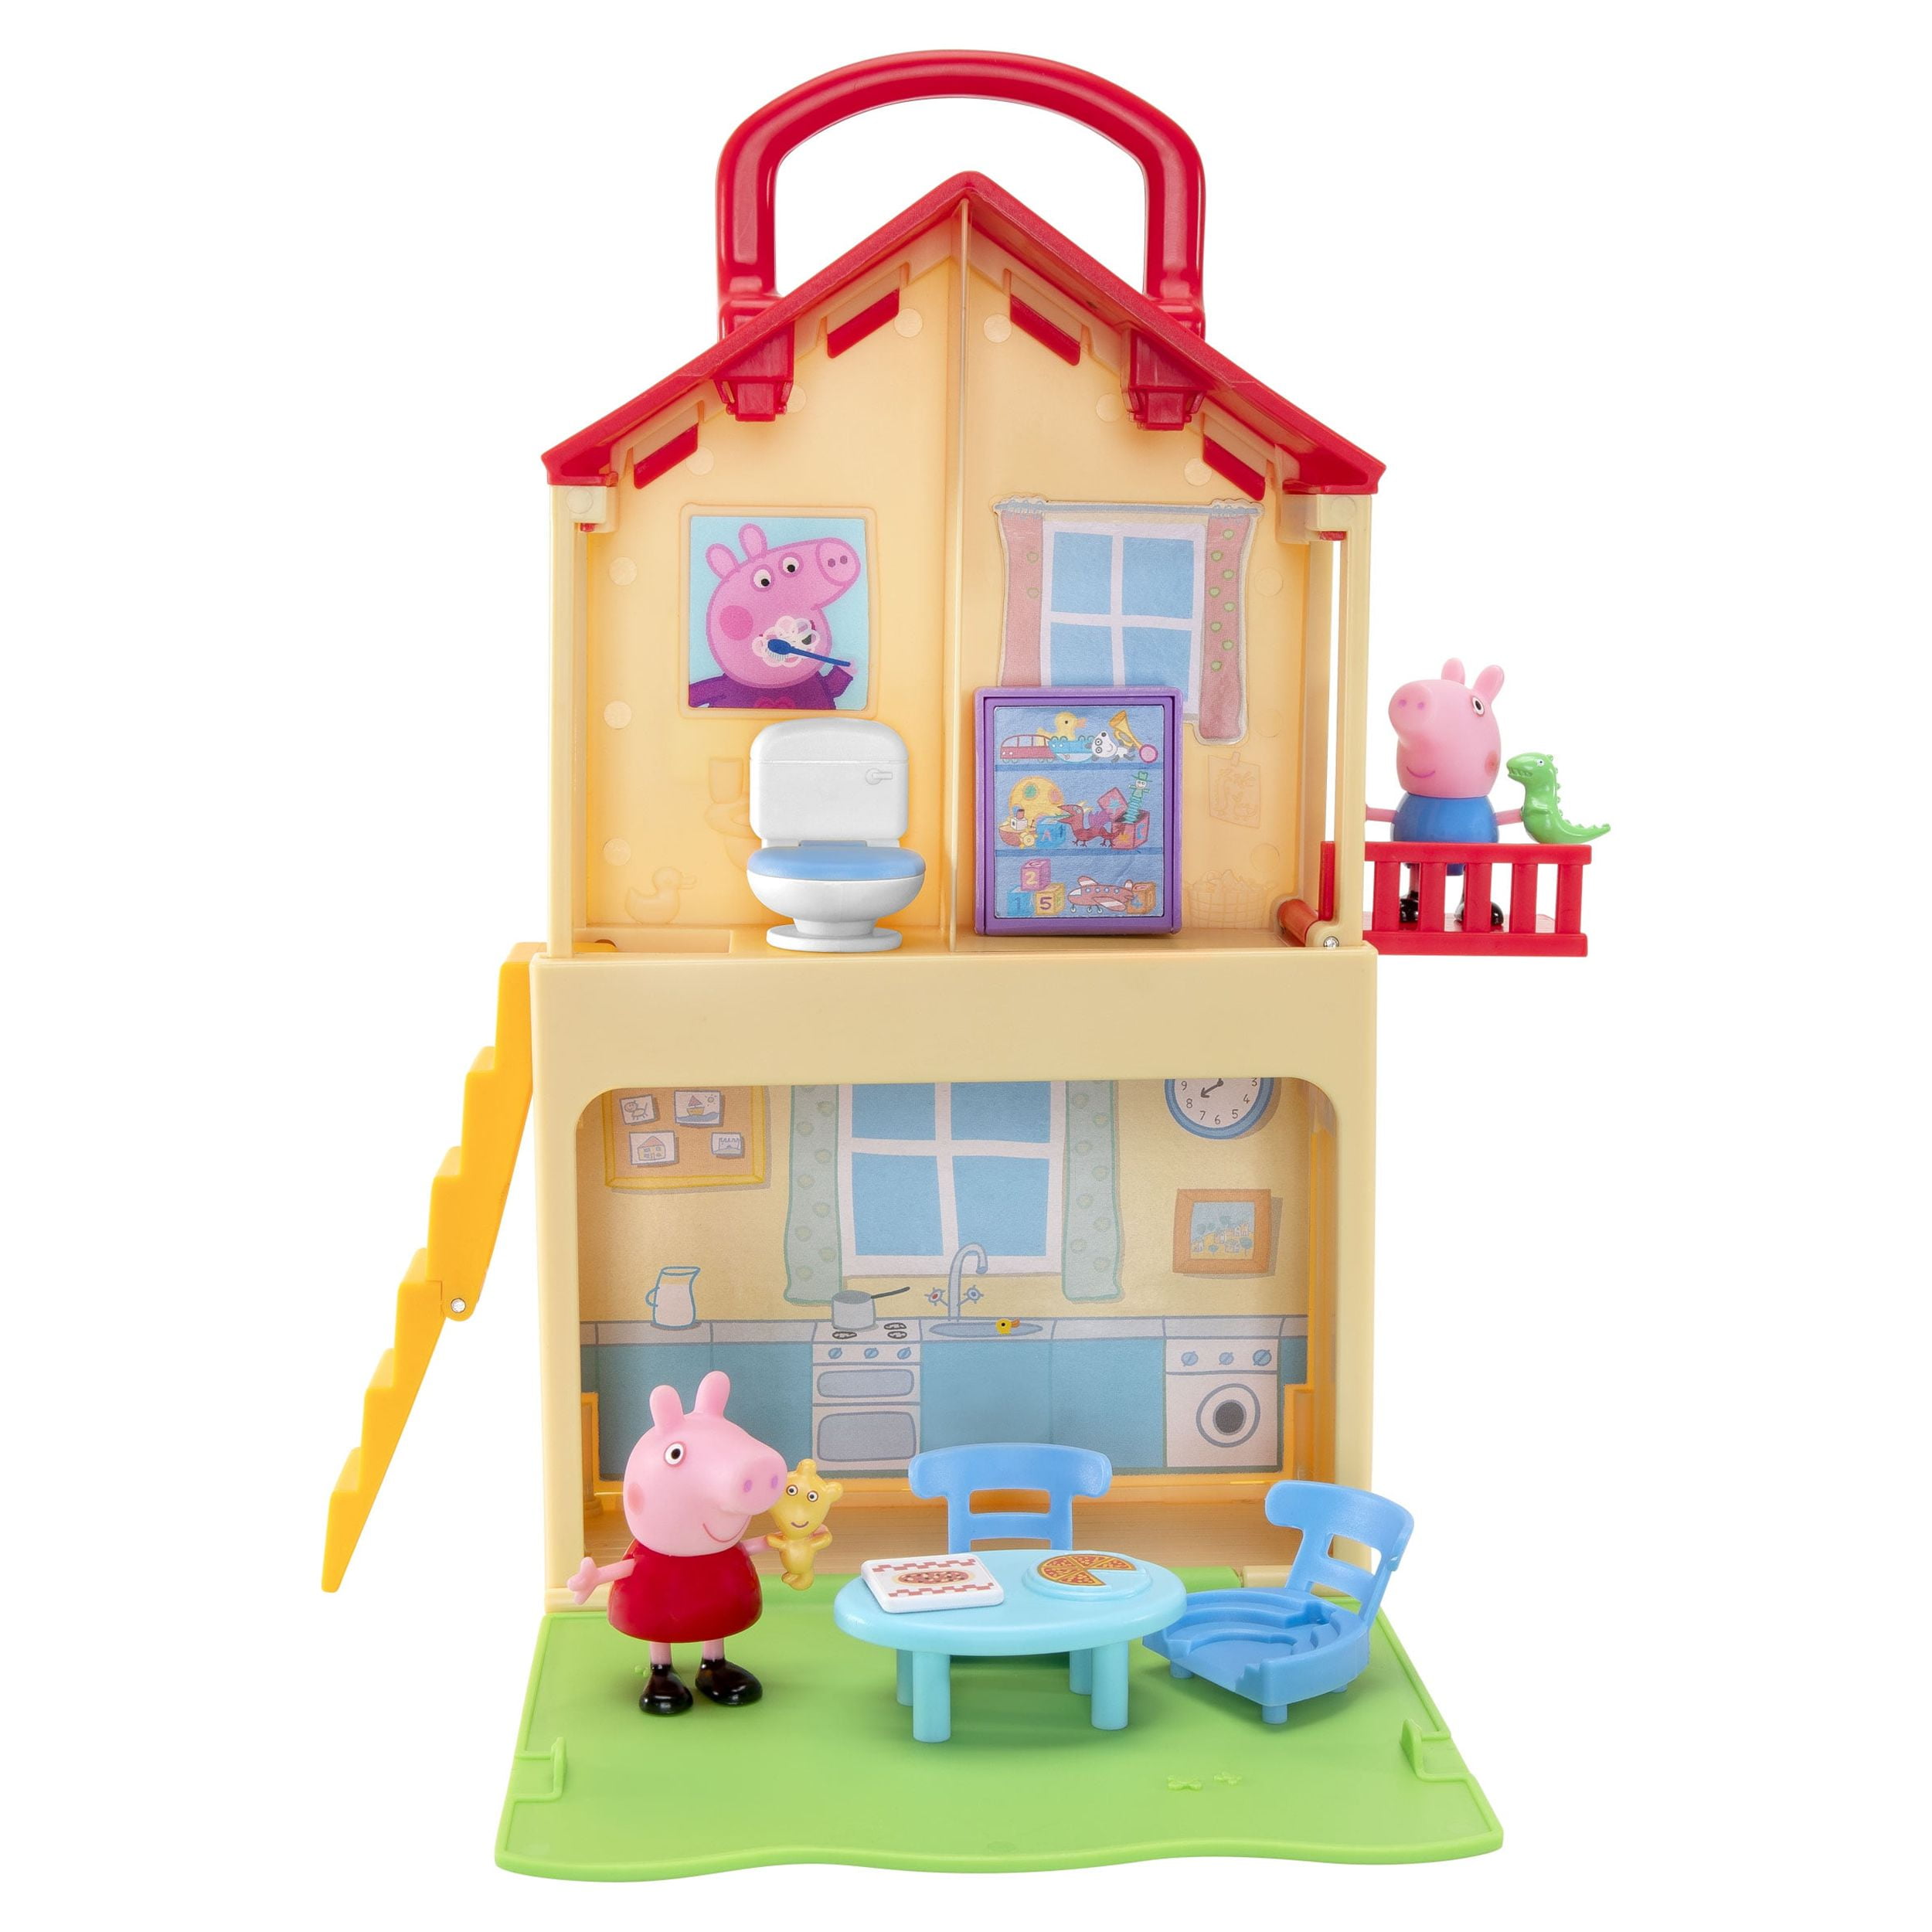 Peppa Pig 06384 Peppas Family Home Playset